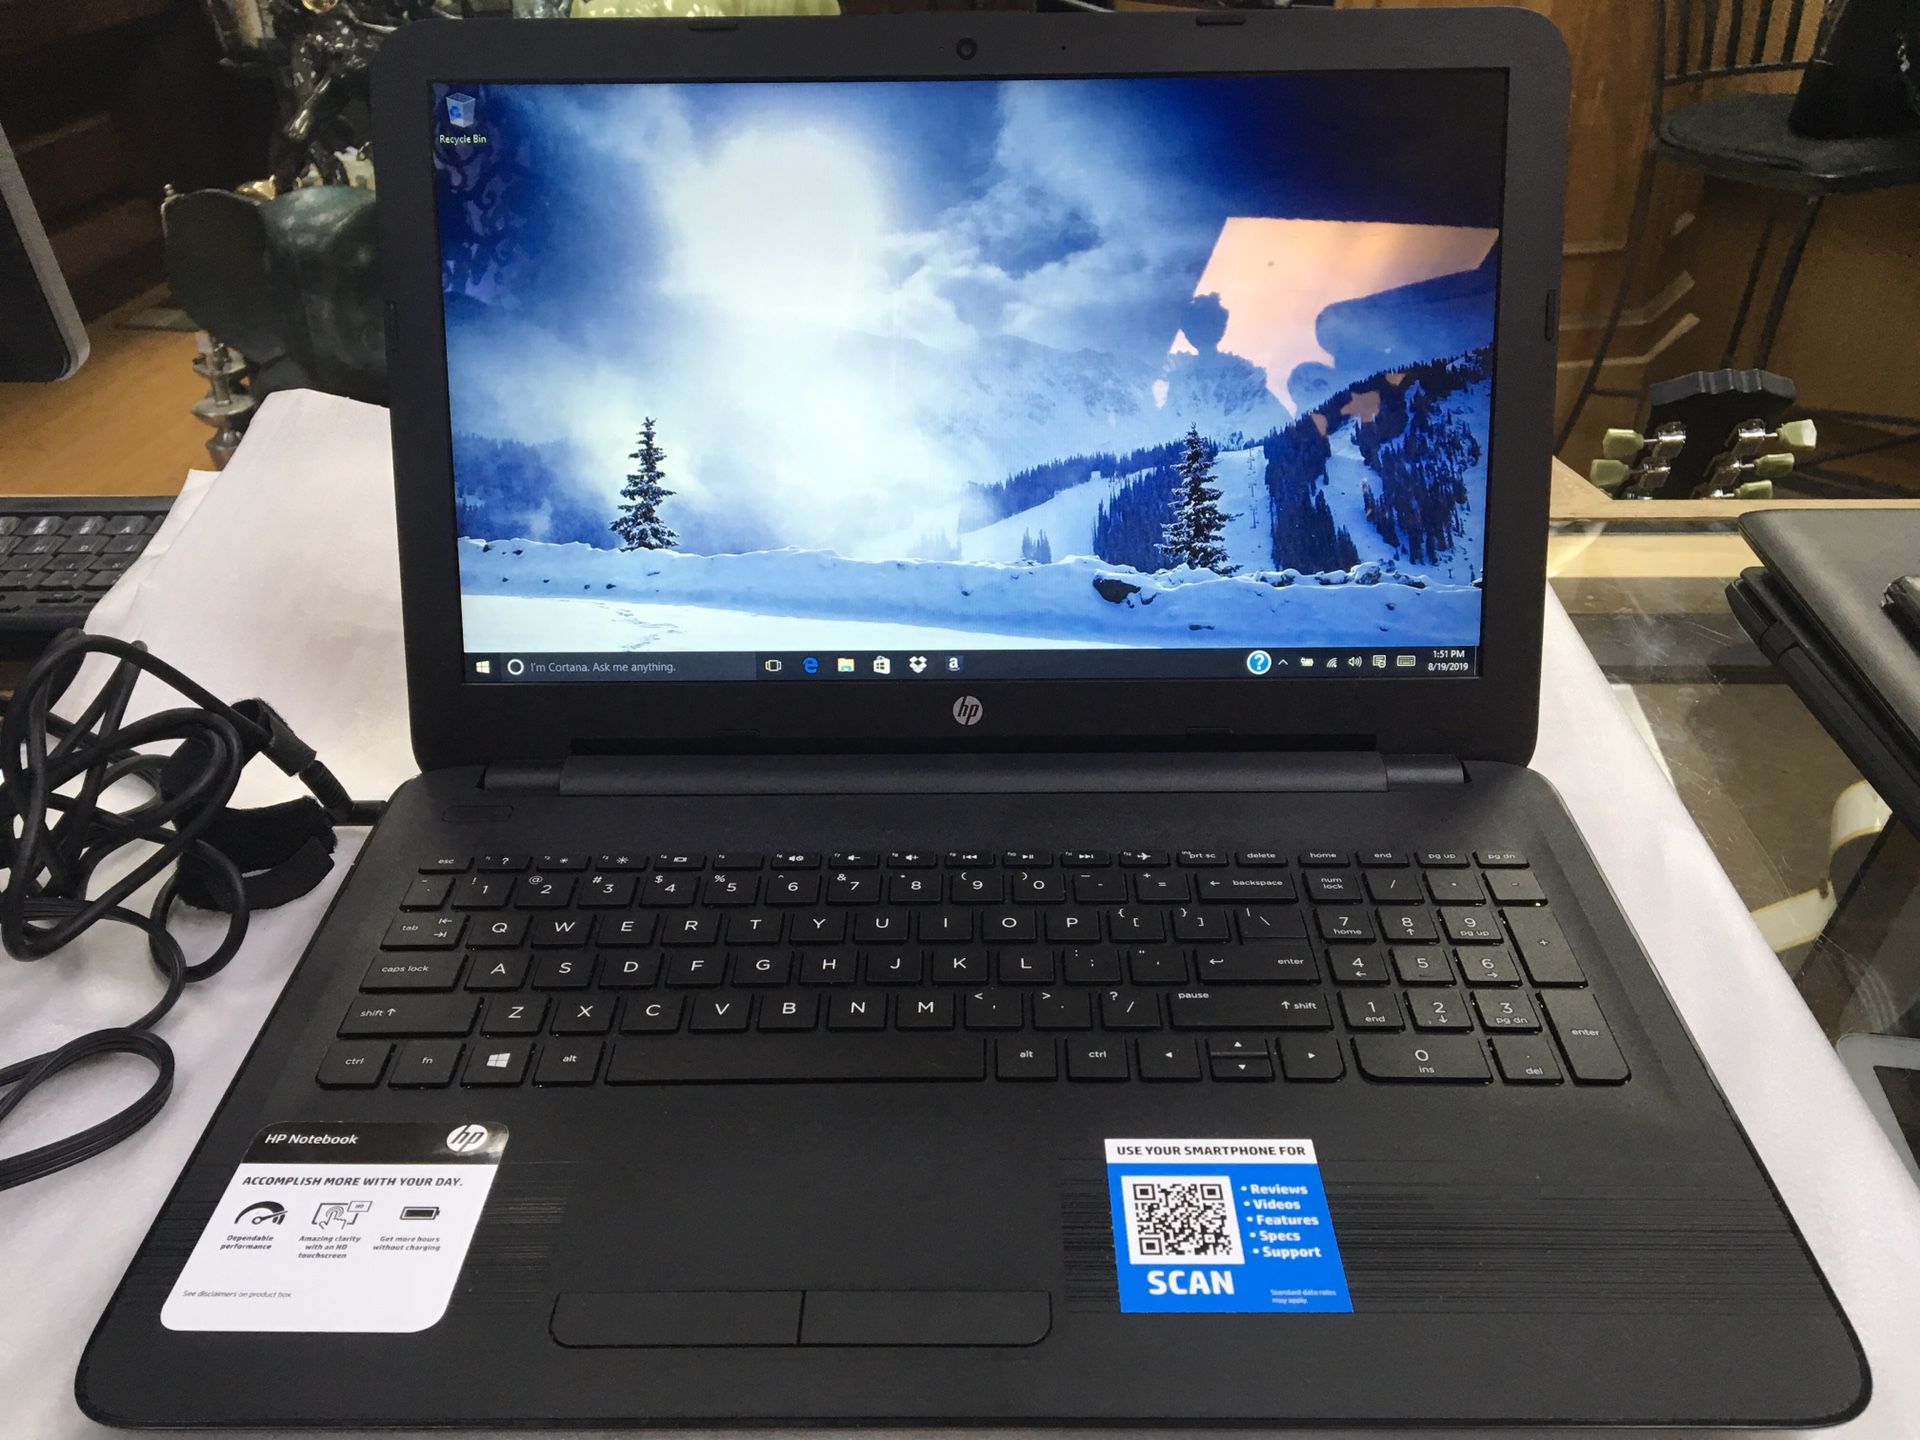 HP Notebook 15.6” Touchscreen Model 15-ba079dx AMD A10-9600P Radeon R5 1TB HDD 6GB RAM